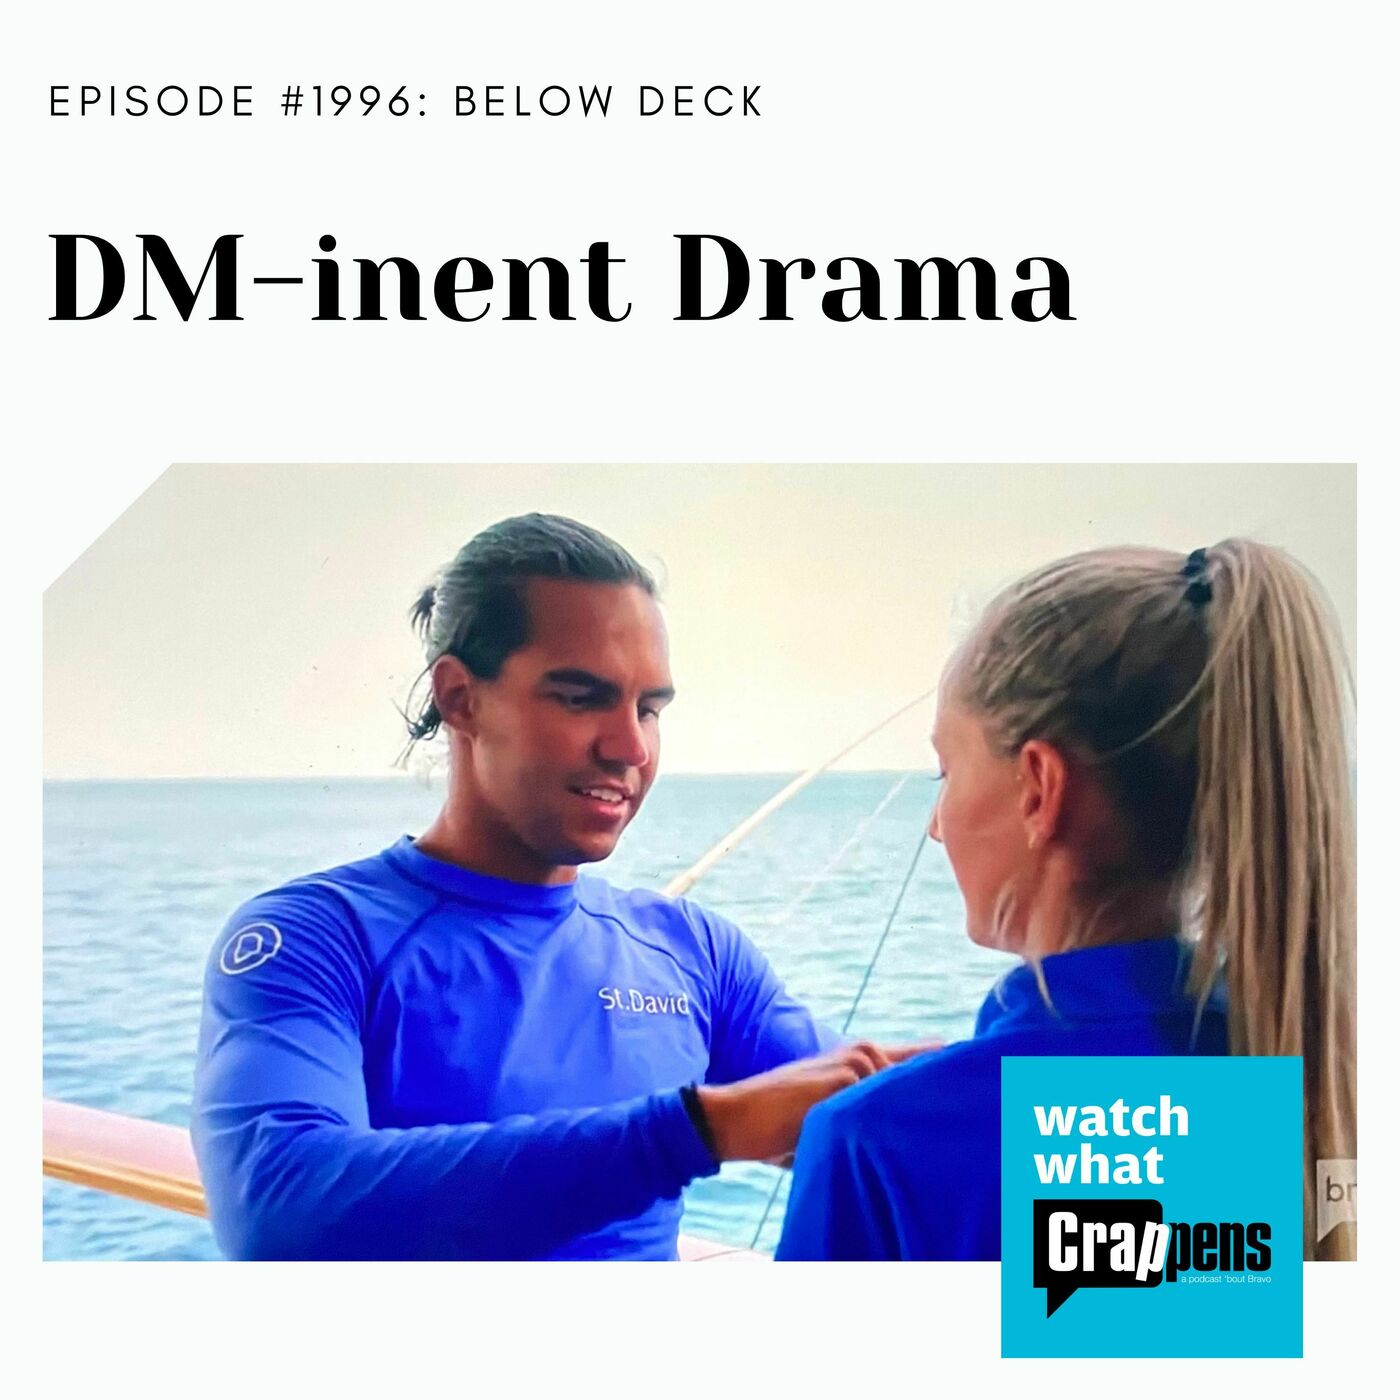 Below Deck: DM-inent Drama